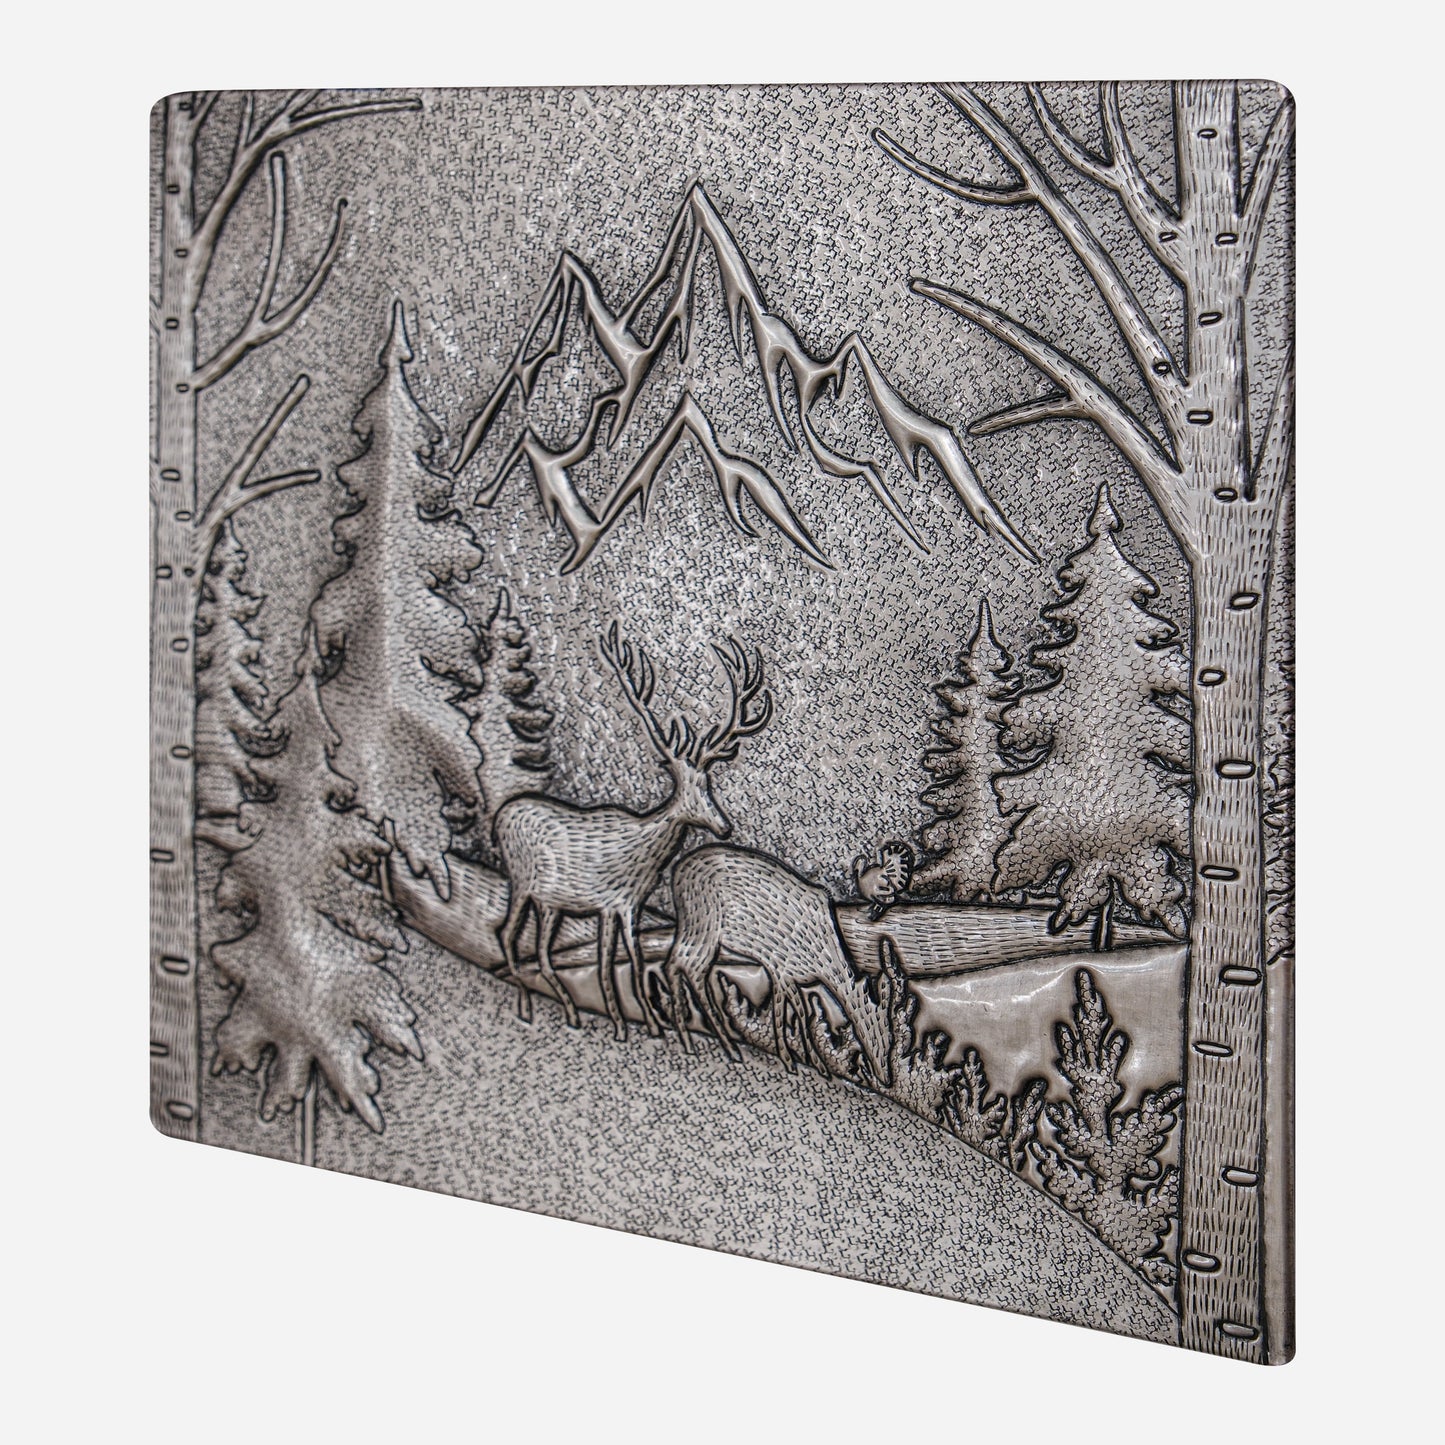 Handmade Copper Kitchen Backsplash Tile - Majestic Mountain and Forest Scene